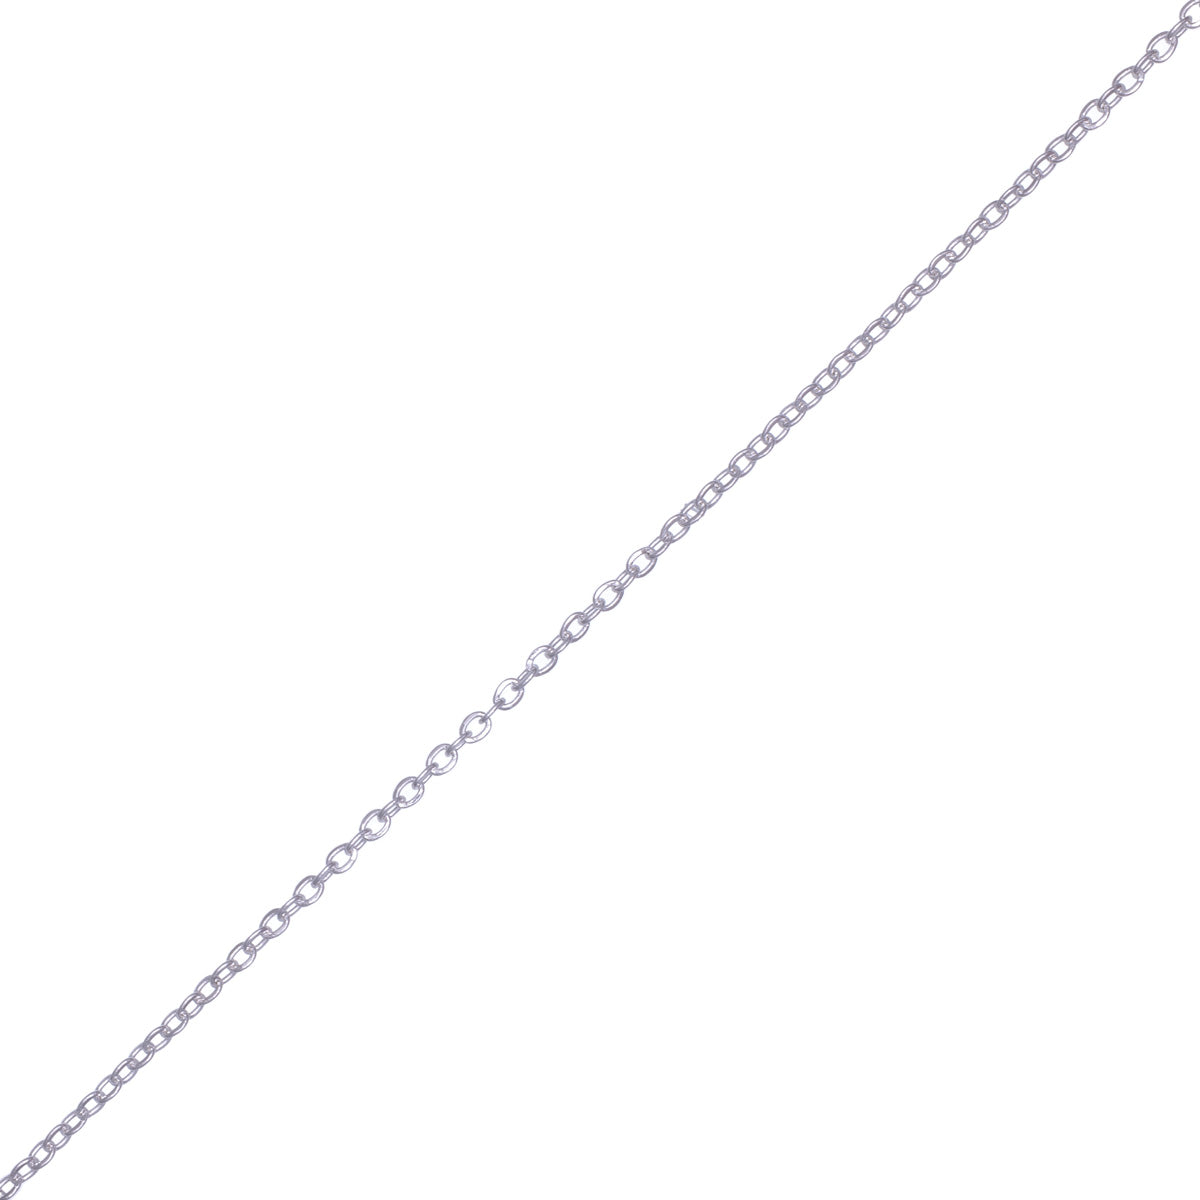 Thin steel necklace 45cm +5cm (Steel 316L)